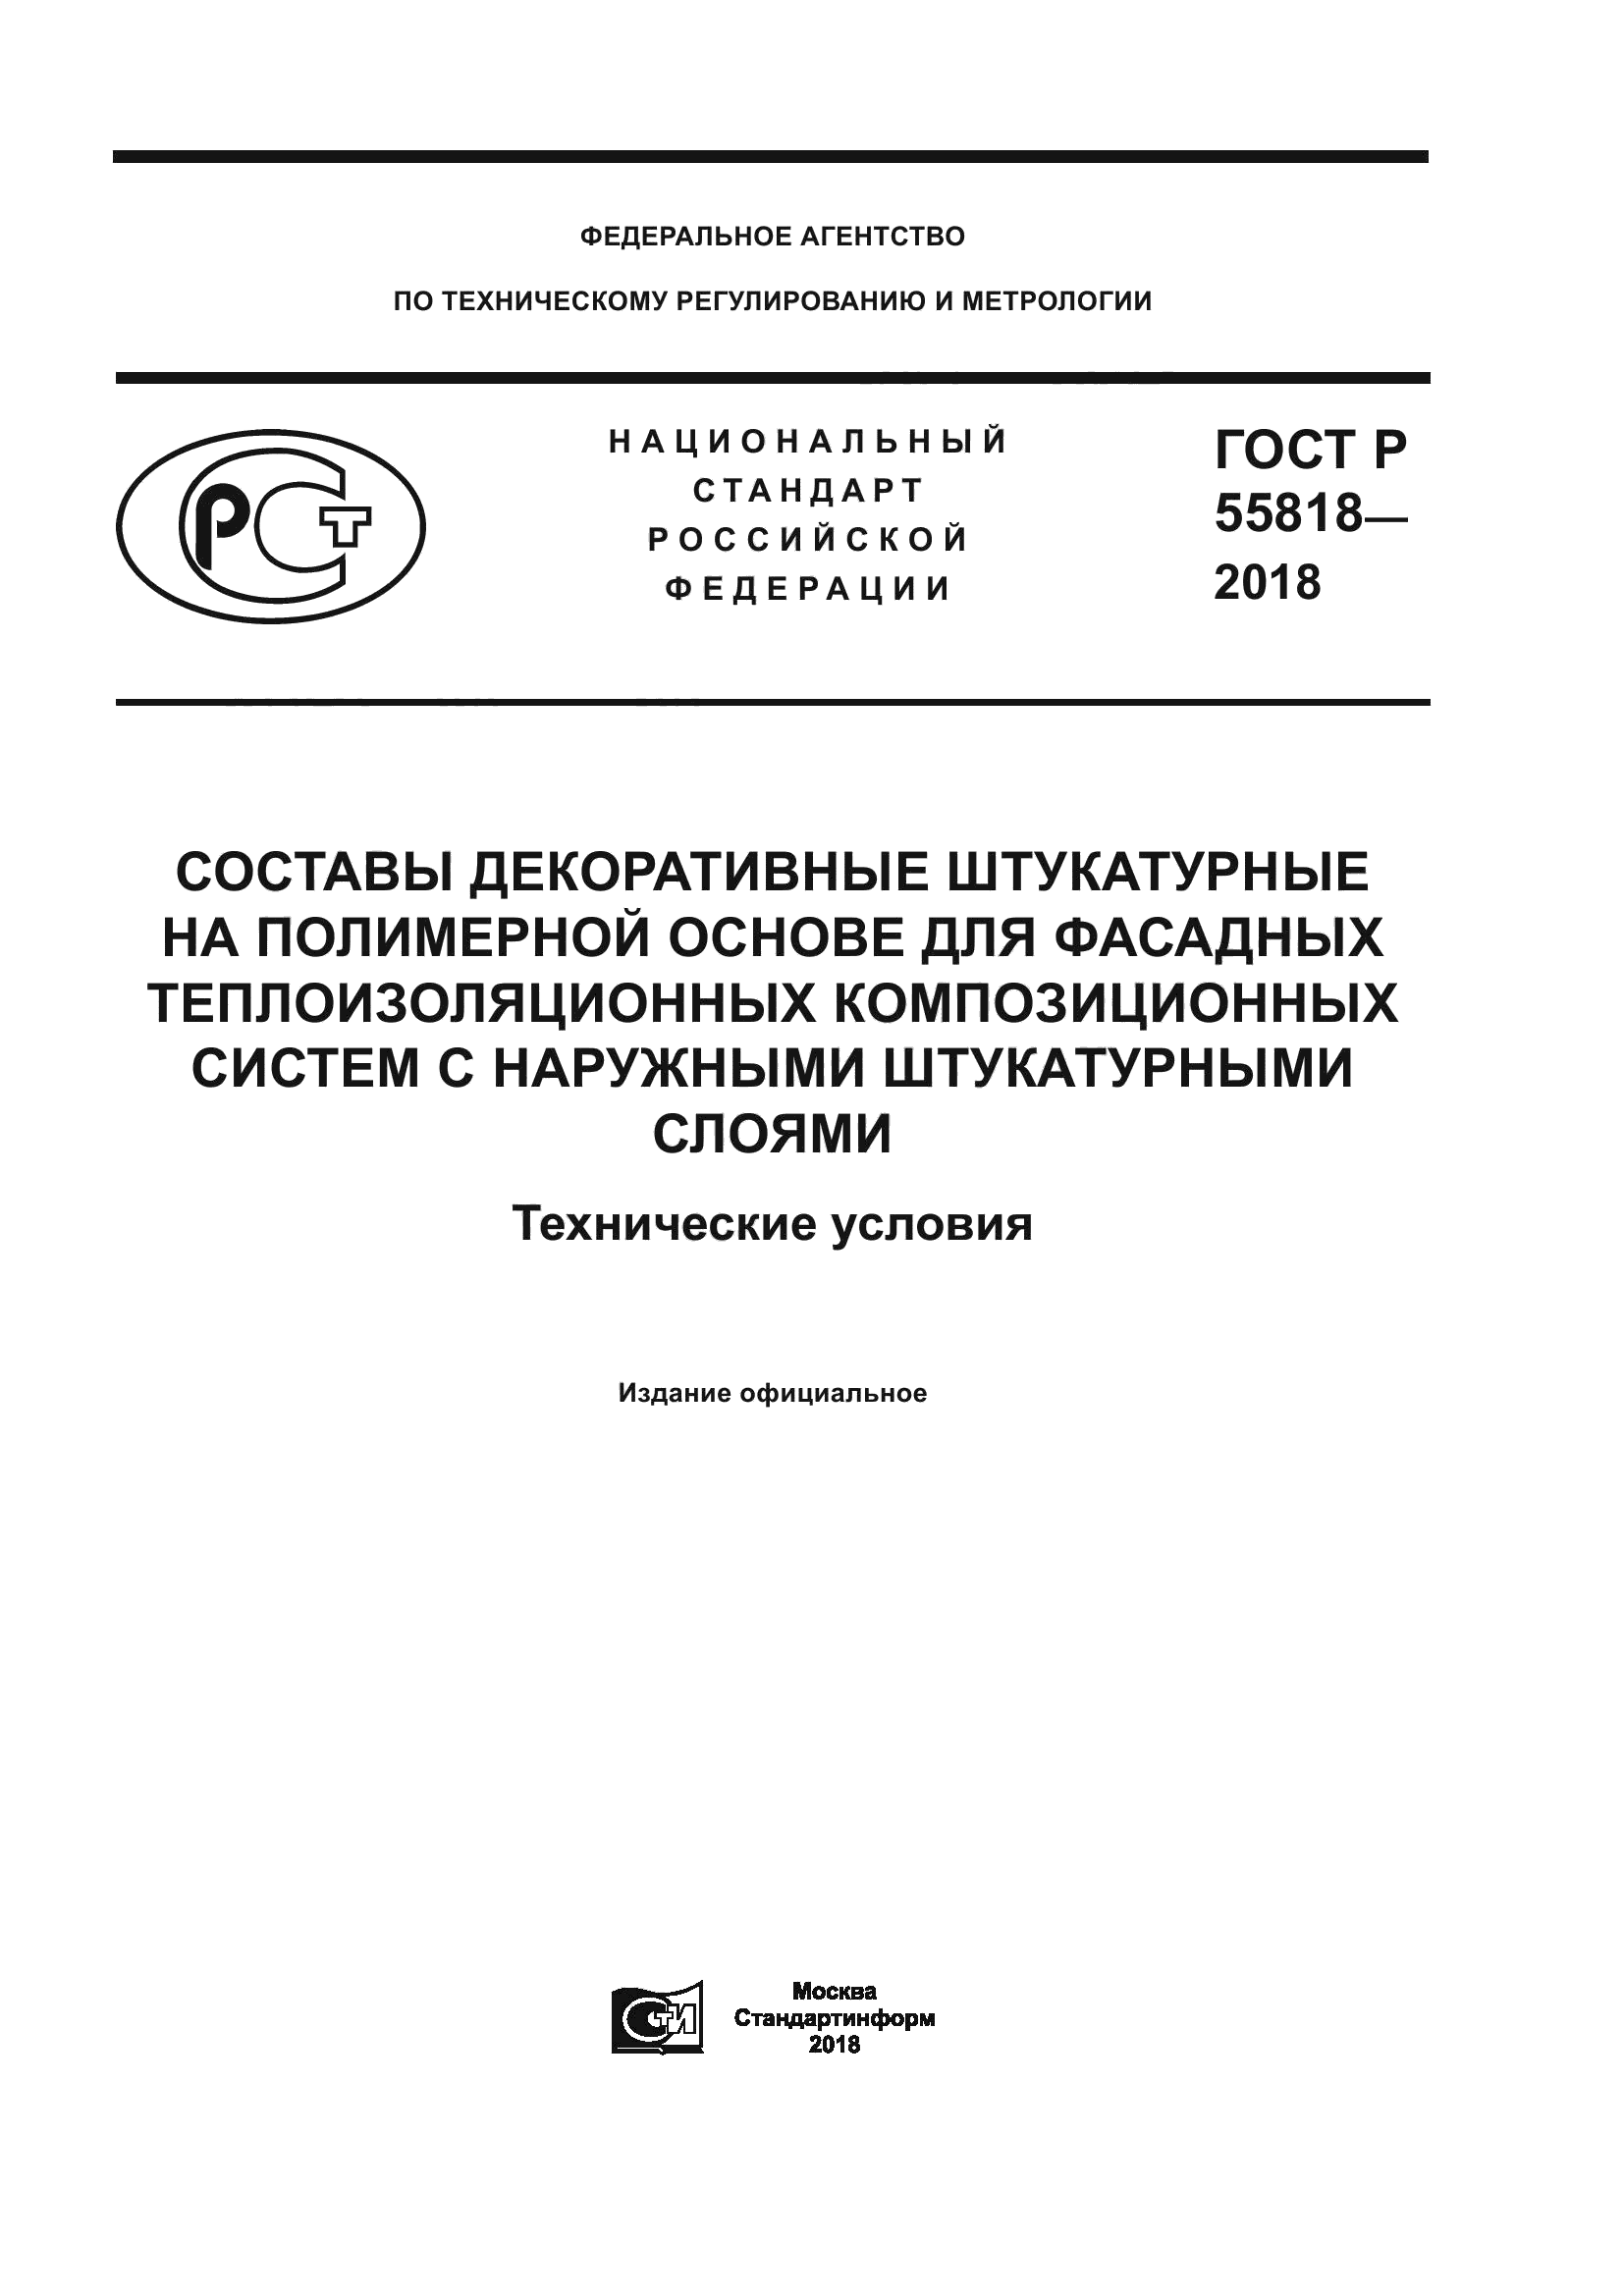 ГОСТ Р 55818-2018